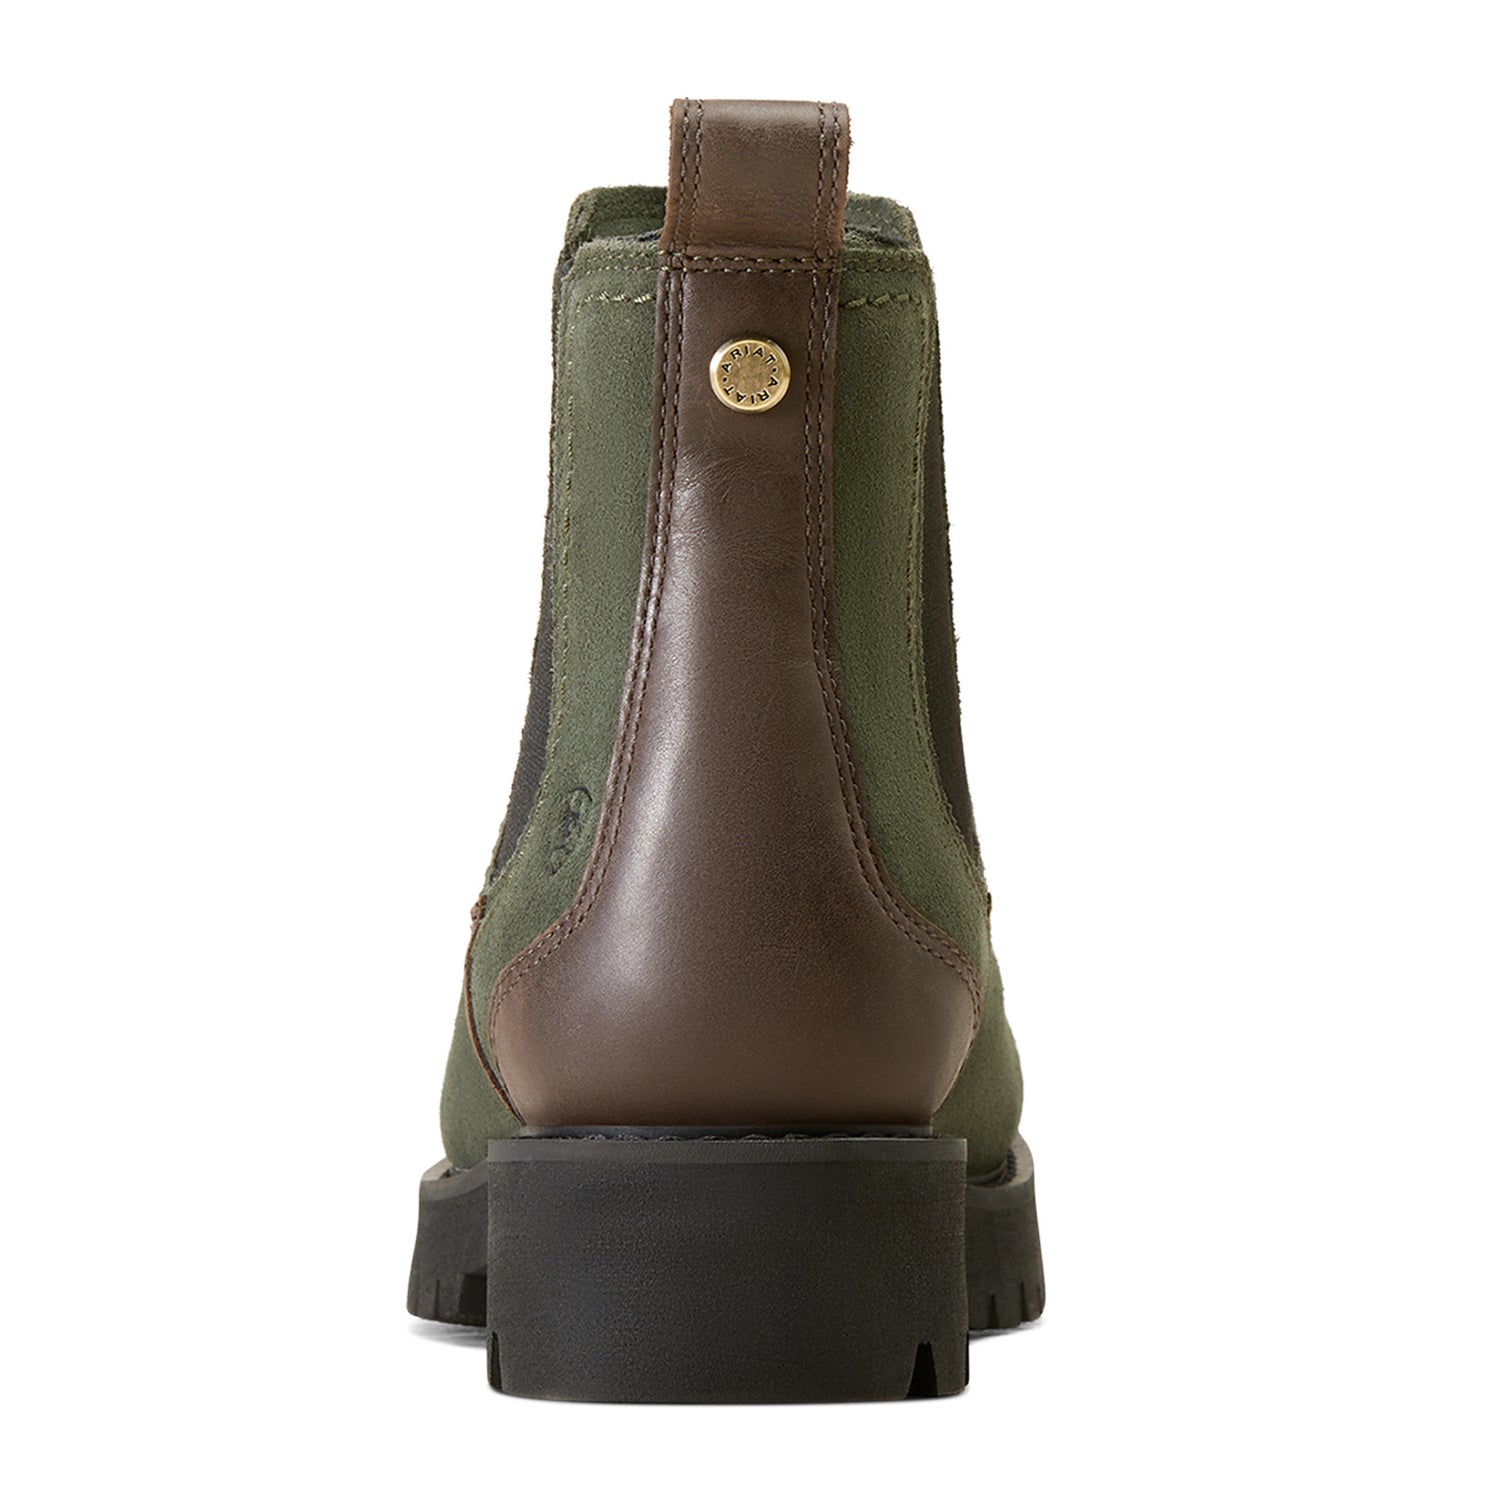 Ariat Wexford Lug Waterproof Chelsea Boots